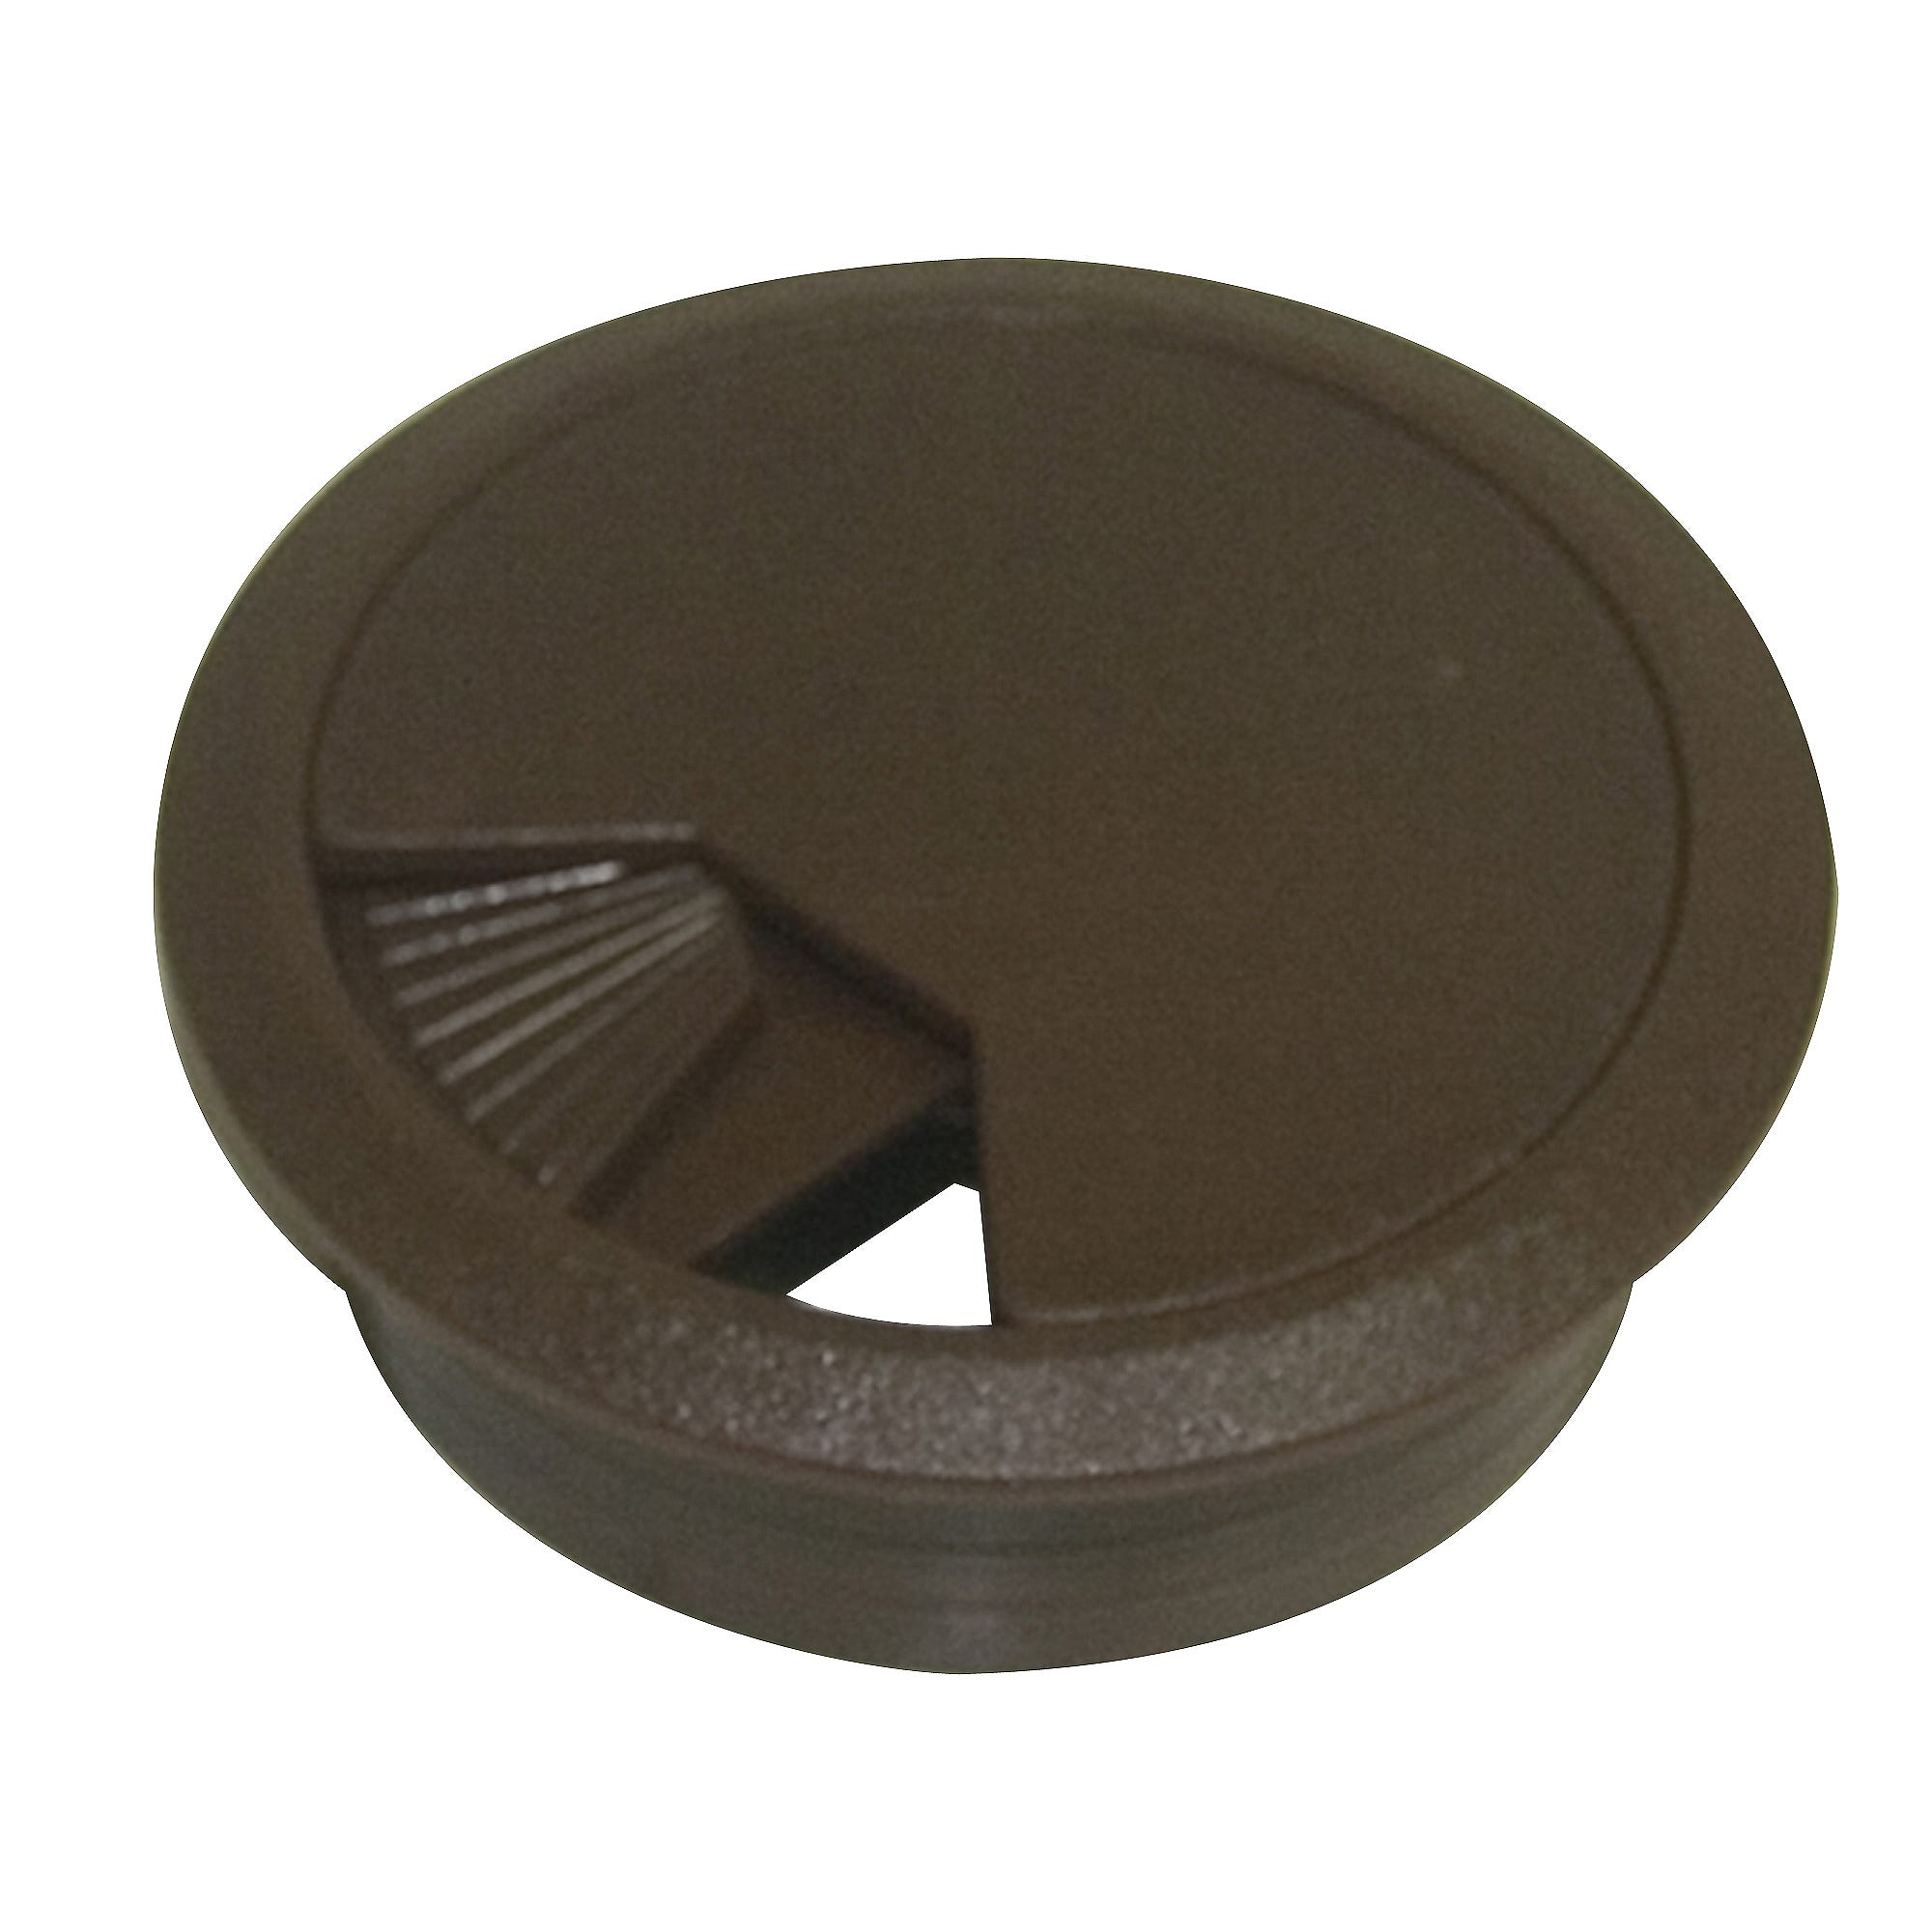 Tapa pasacables circular, diámetro 60mm, Plástico, Gris